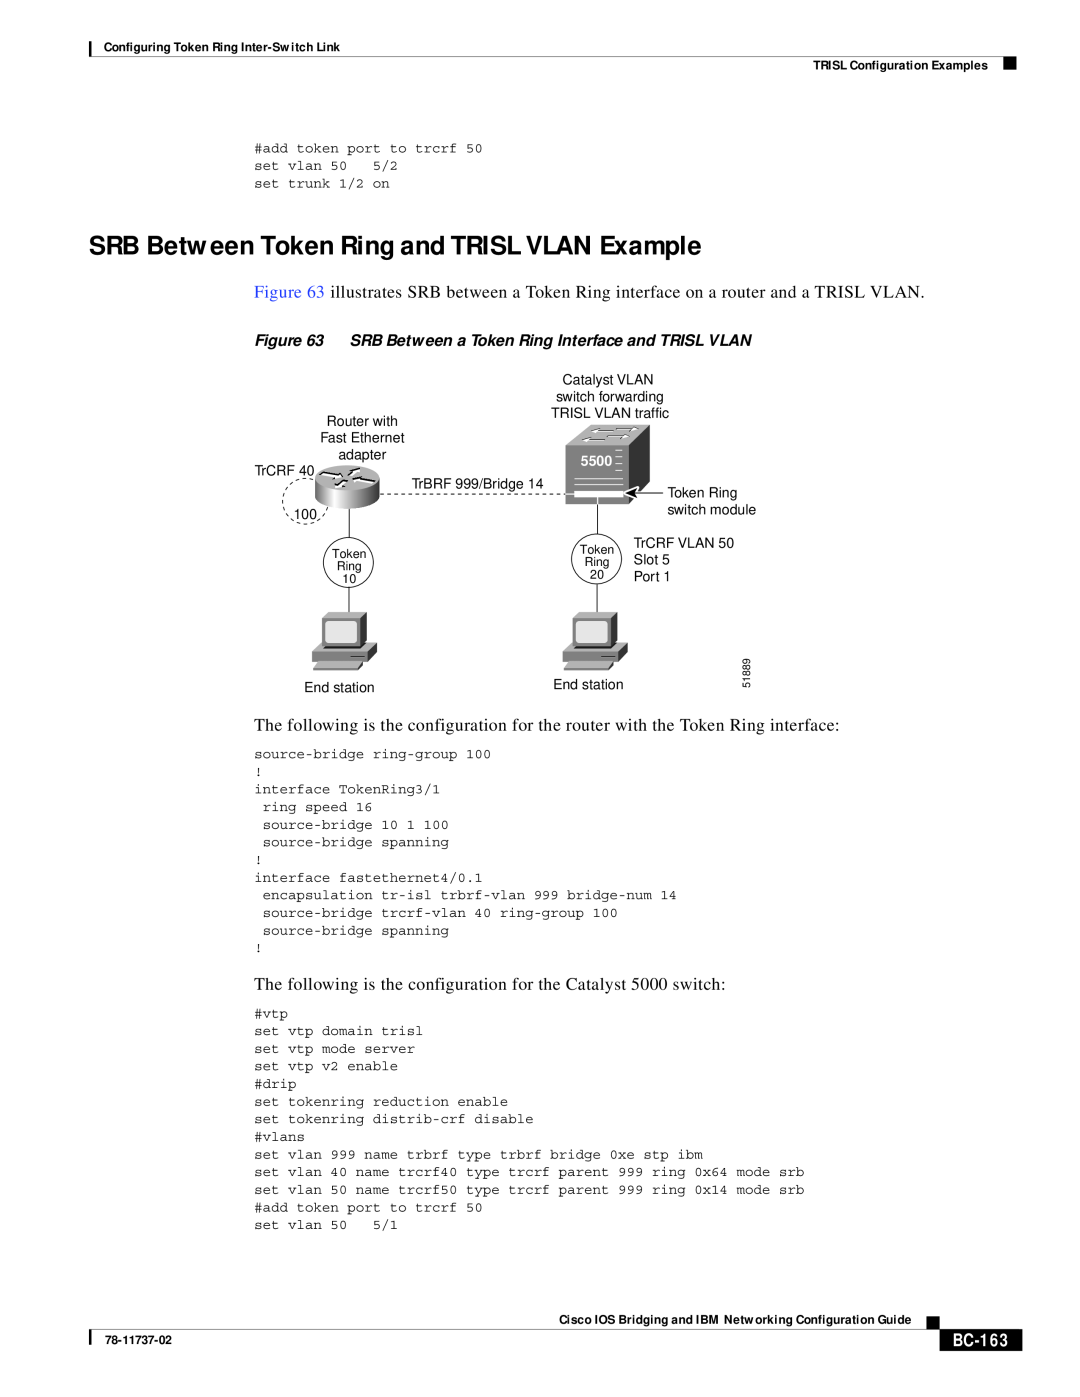 Cisco Systems BC-145 manual SRB Between Token Ring and TRISL VLAN Example, BC-163 